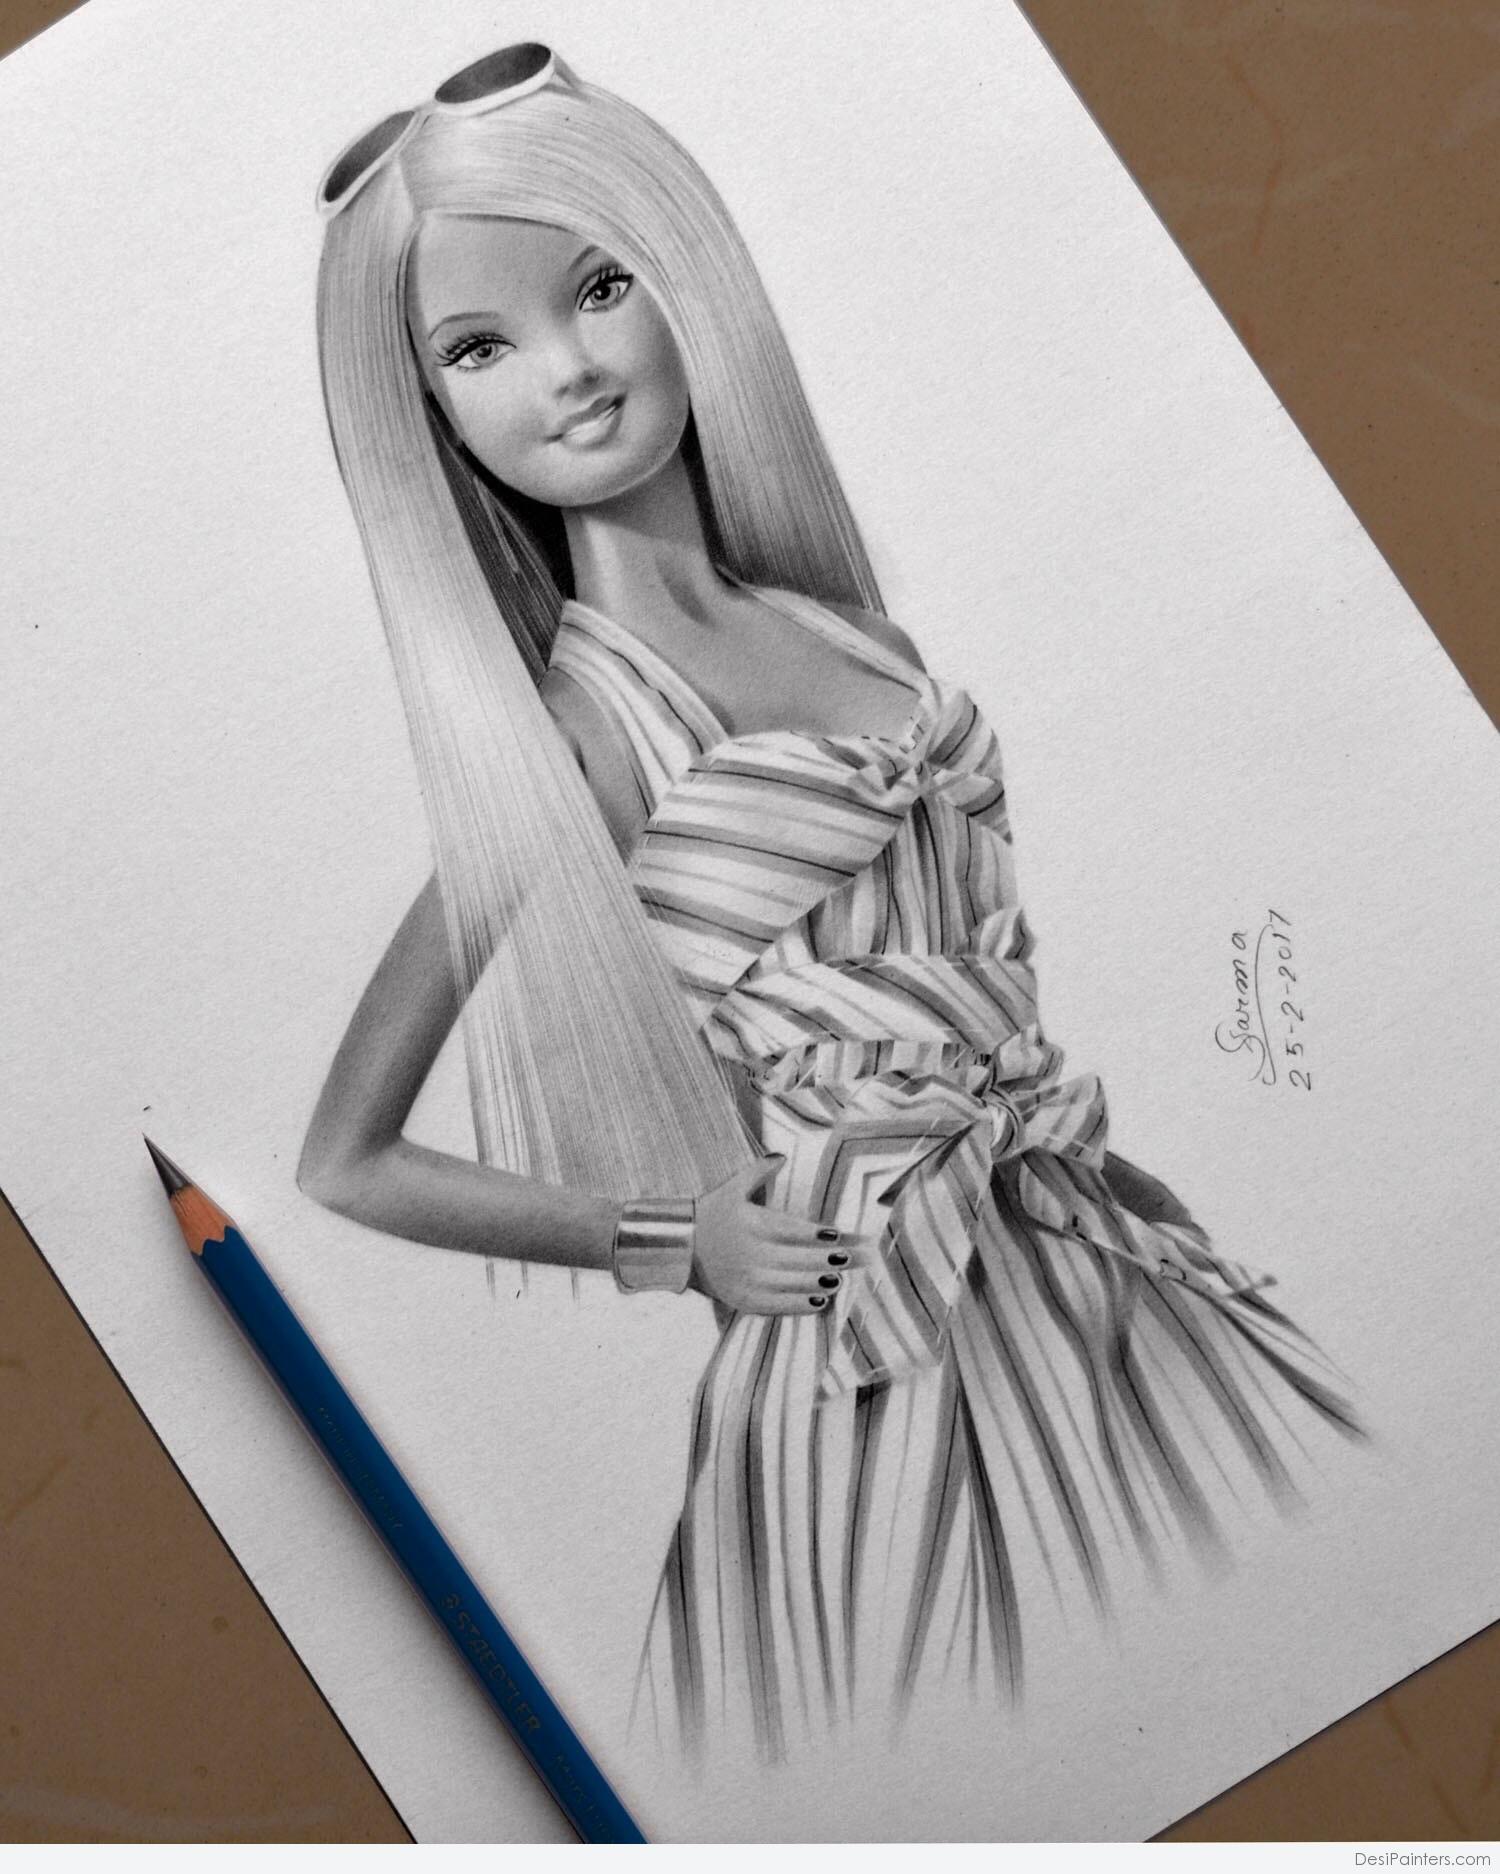 Pencil Sketch of Barbie Doll